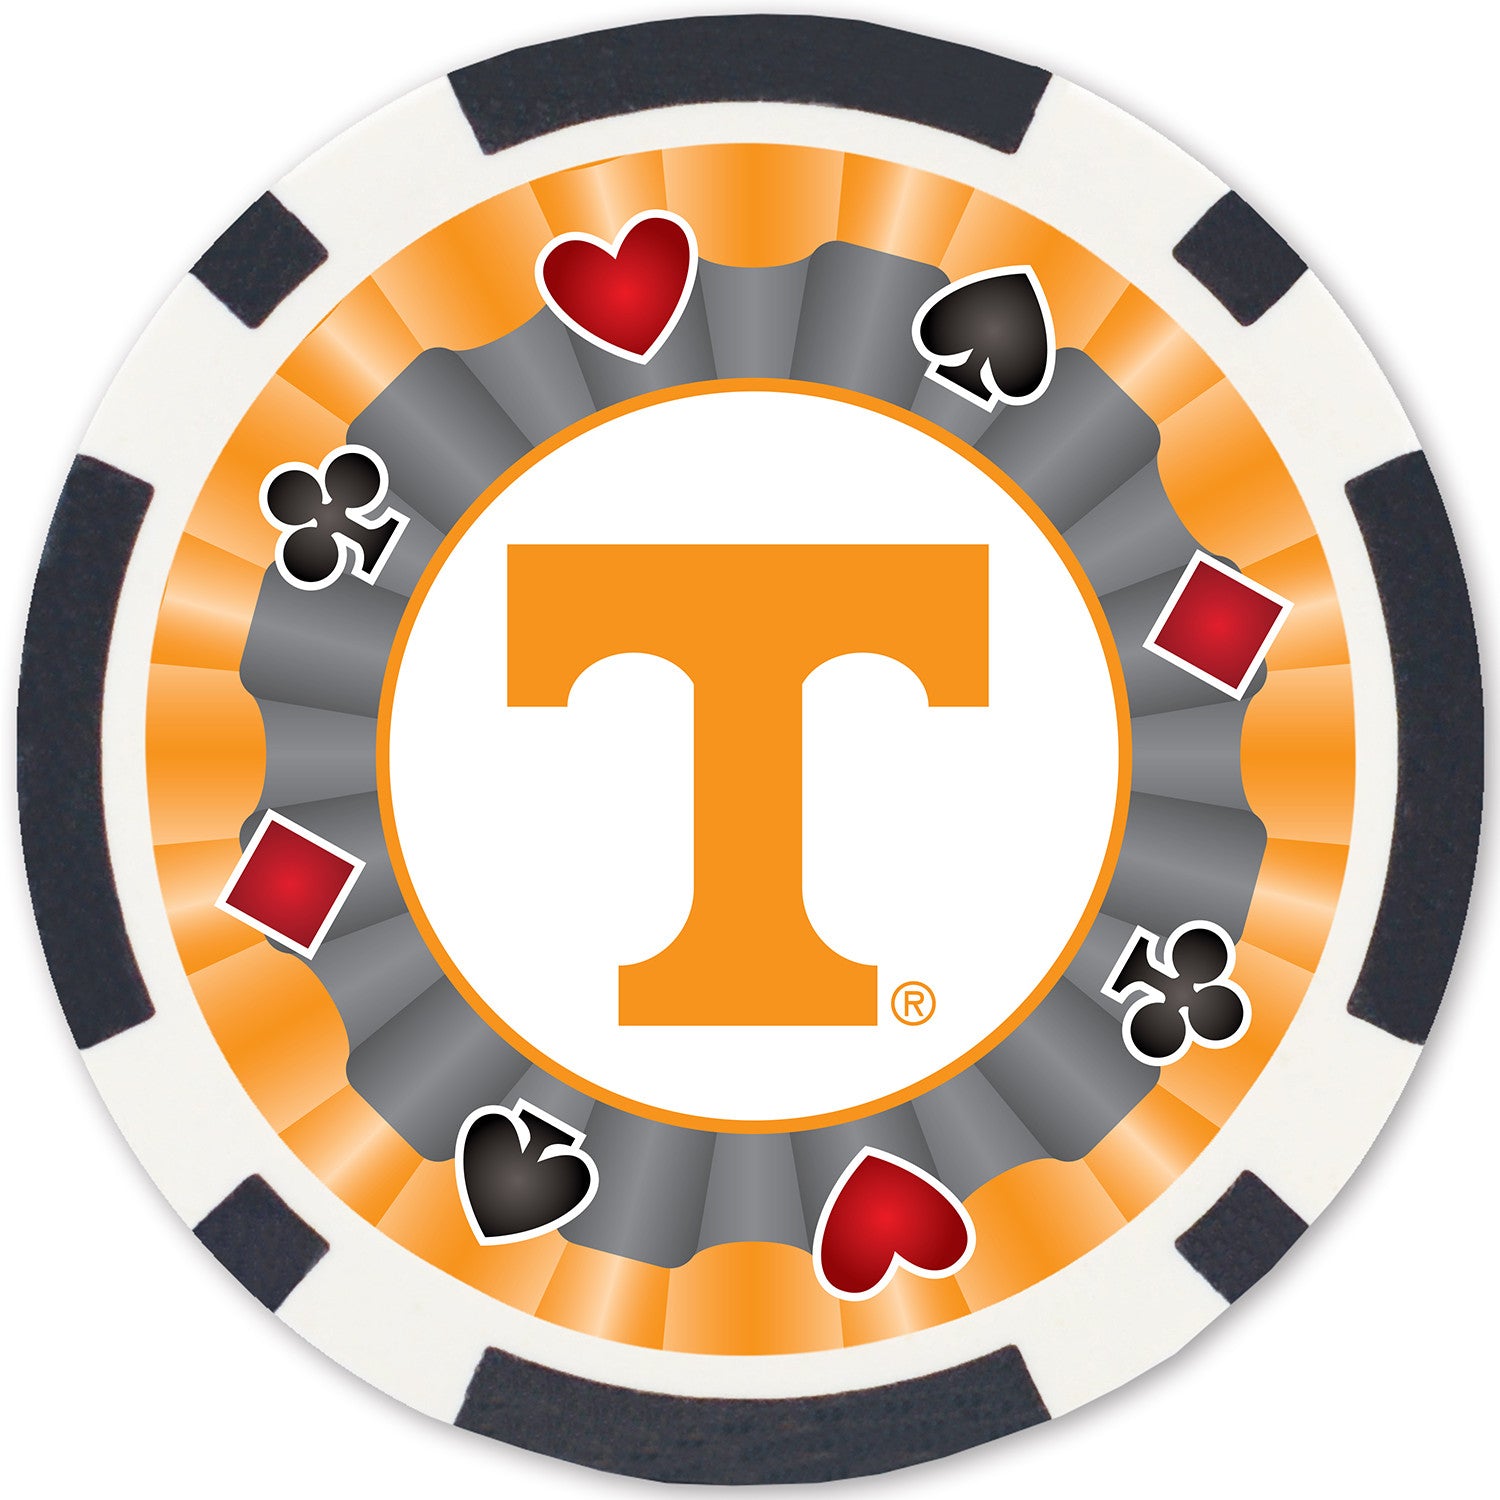 Tennessee Volunteers 100 Piece Poker Chips